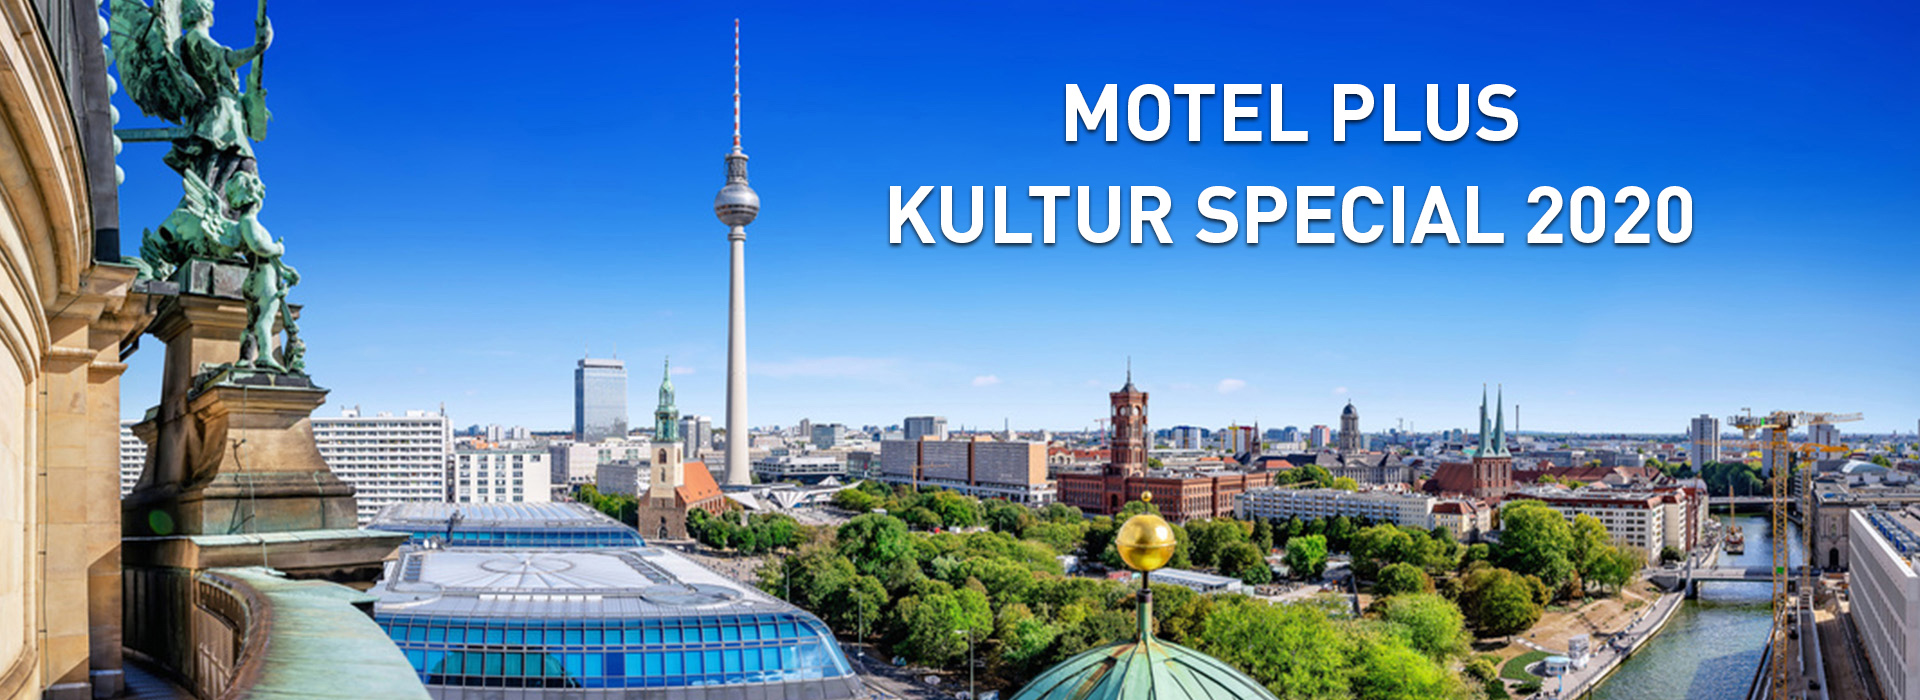 Motel Plus Berlin Neukölln - preisgünstiges Budgethotel in Berlin